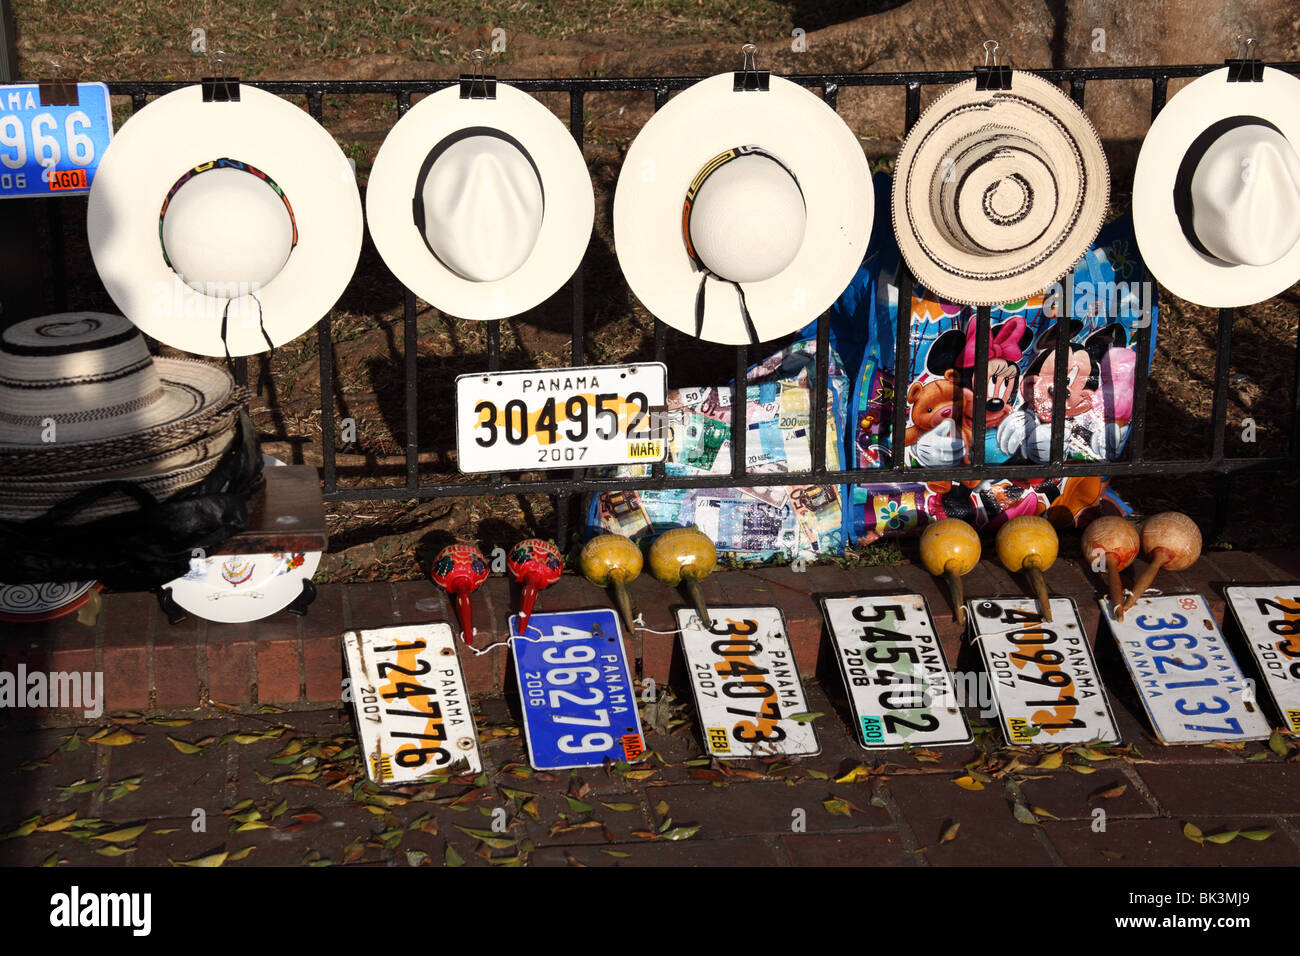 Old car numberplates and Panama hats for sale, Casco Viejo, Panama City, Panama Stock Photo